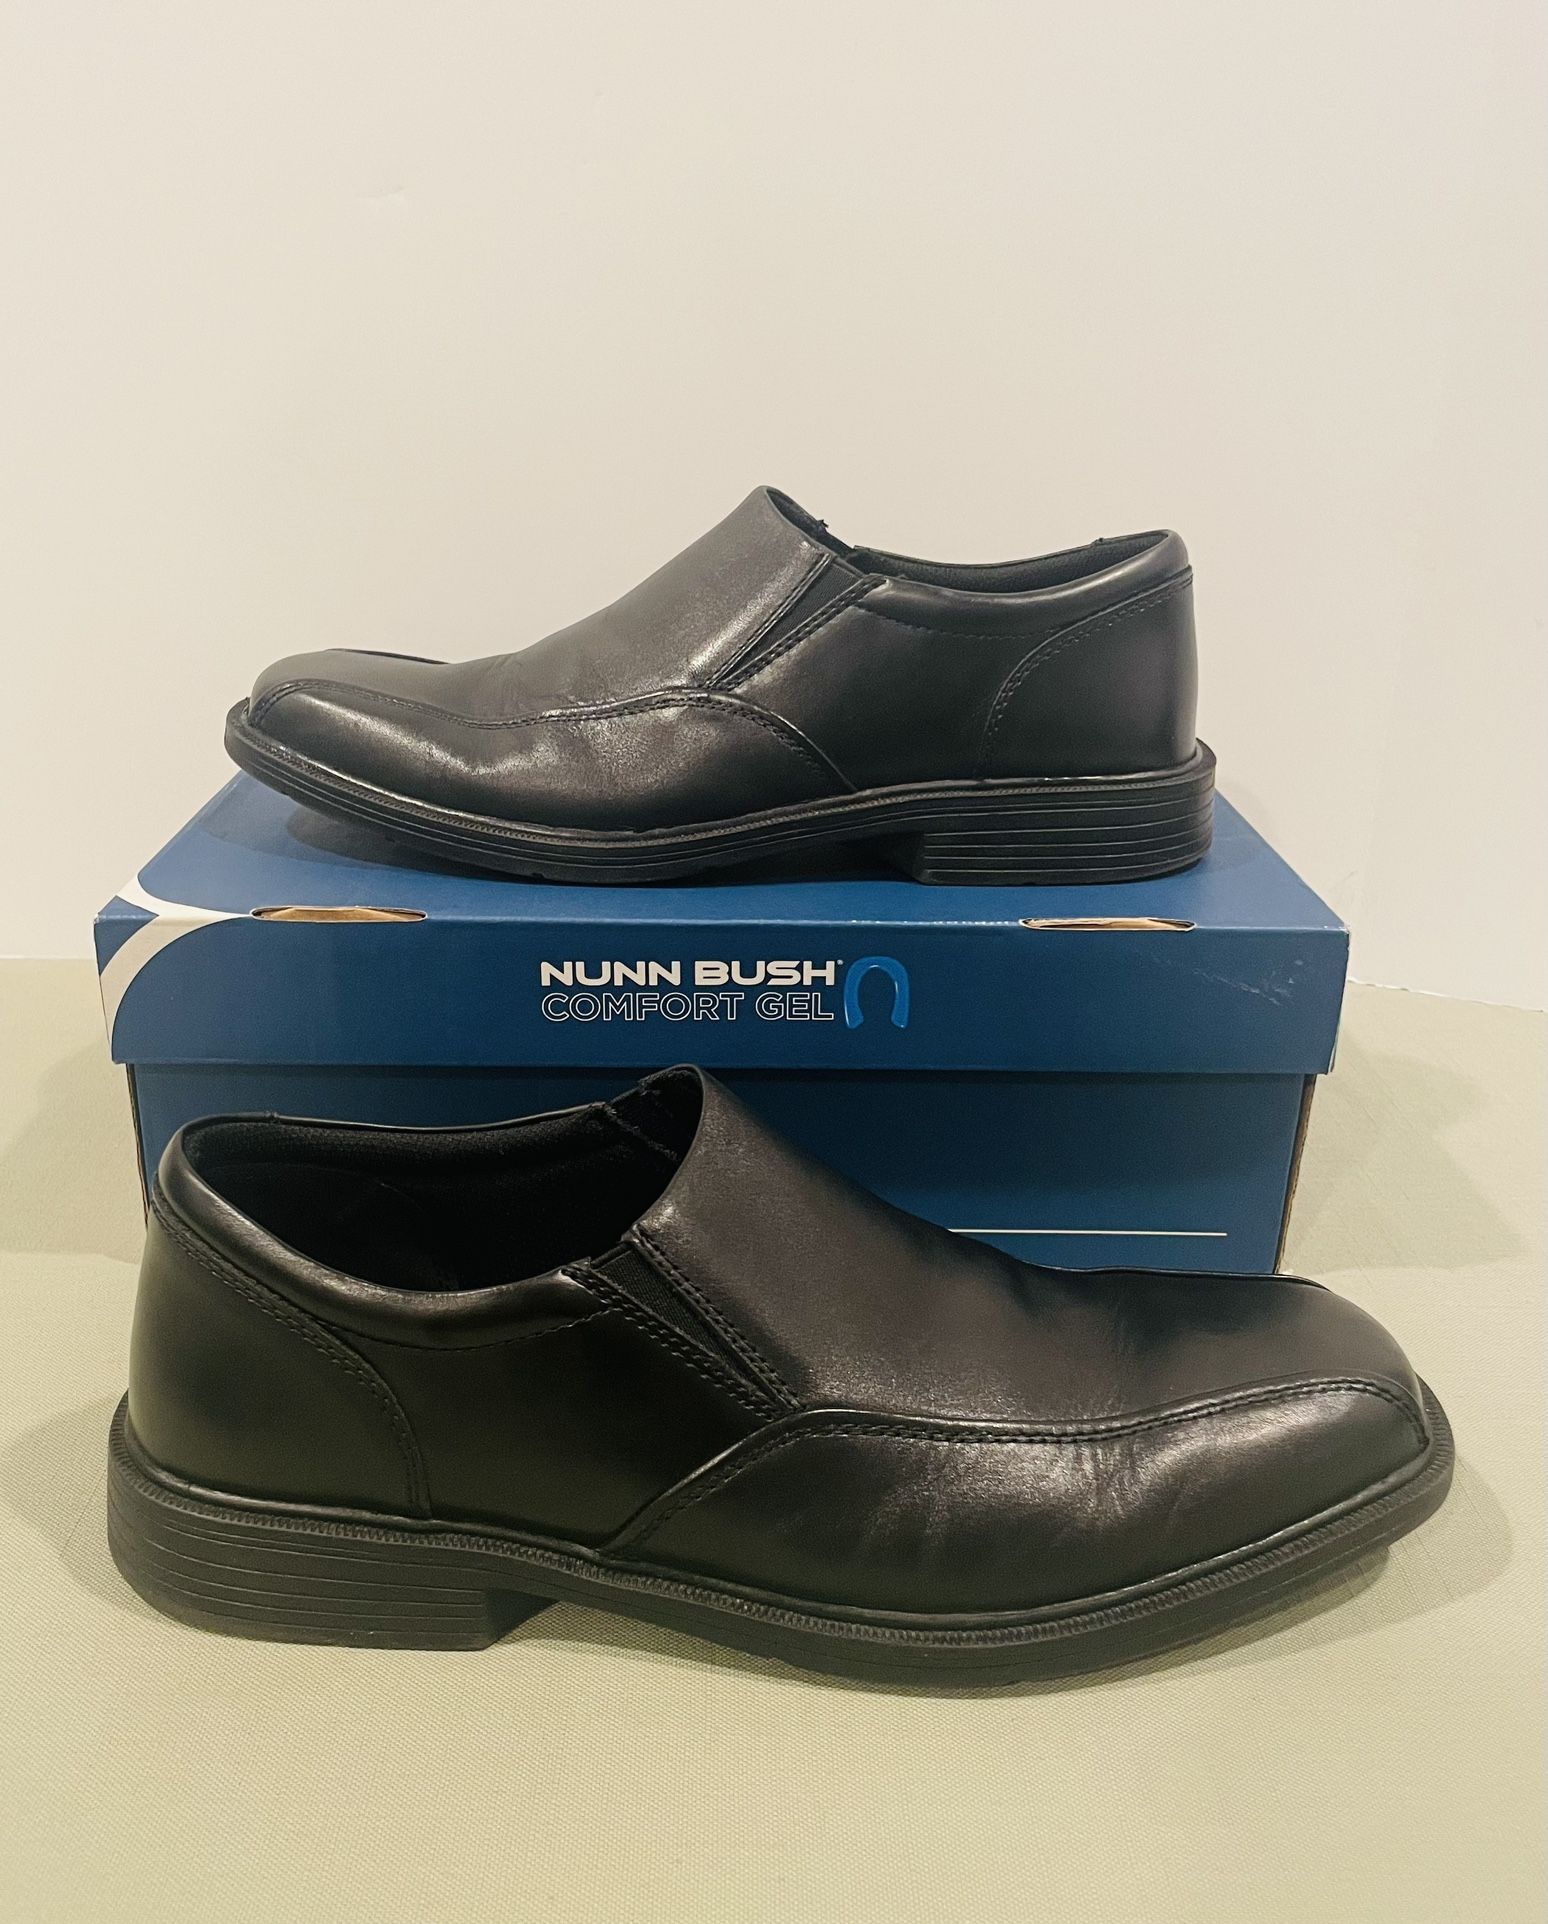 Nunn Bush Comfort Gel Men's Louis Black Leather Slip-On Shoes (Mens 11)